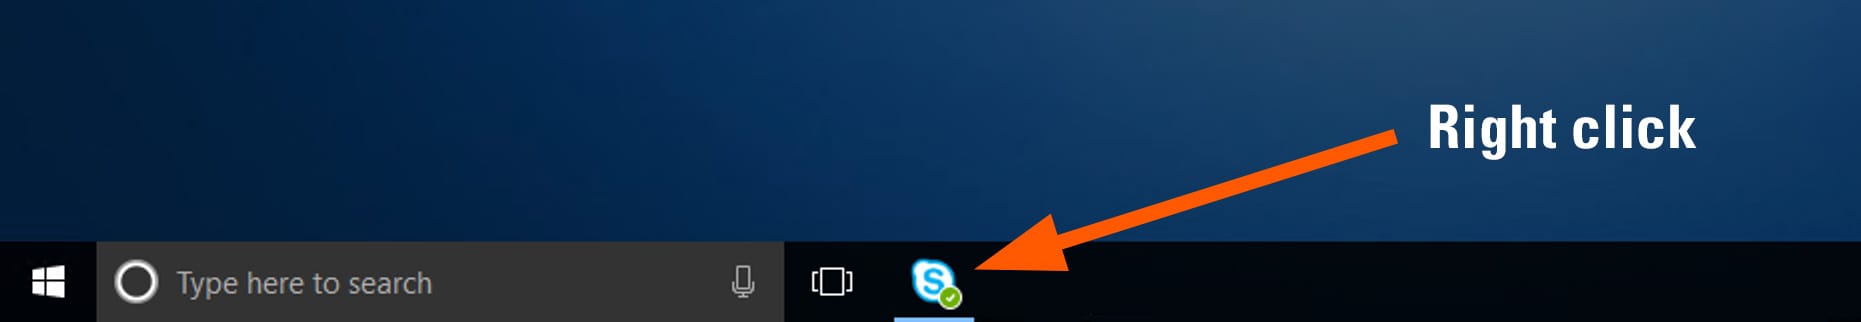 Skype for Business icon appears on Windows taskbar